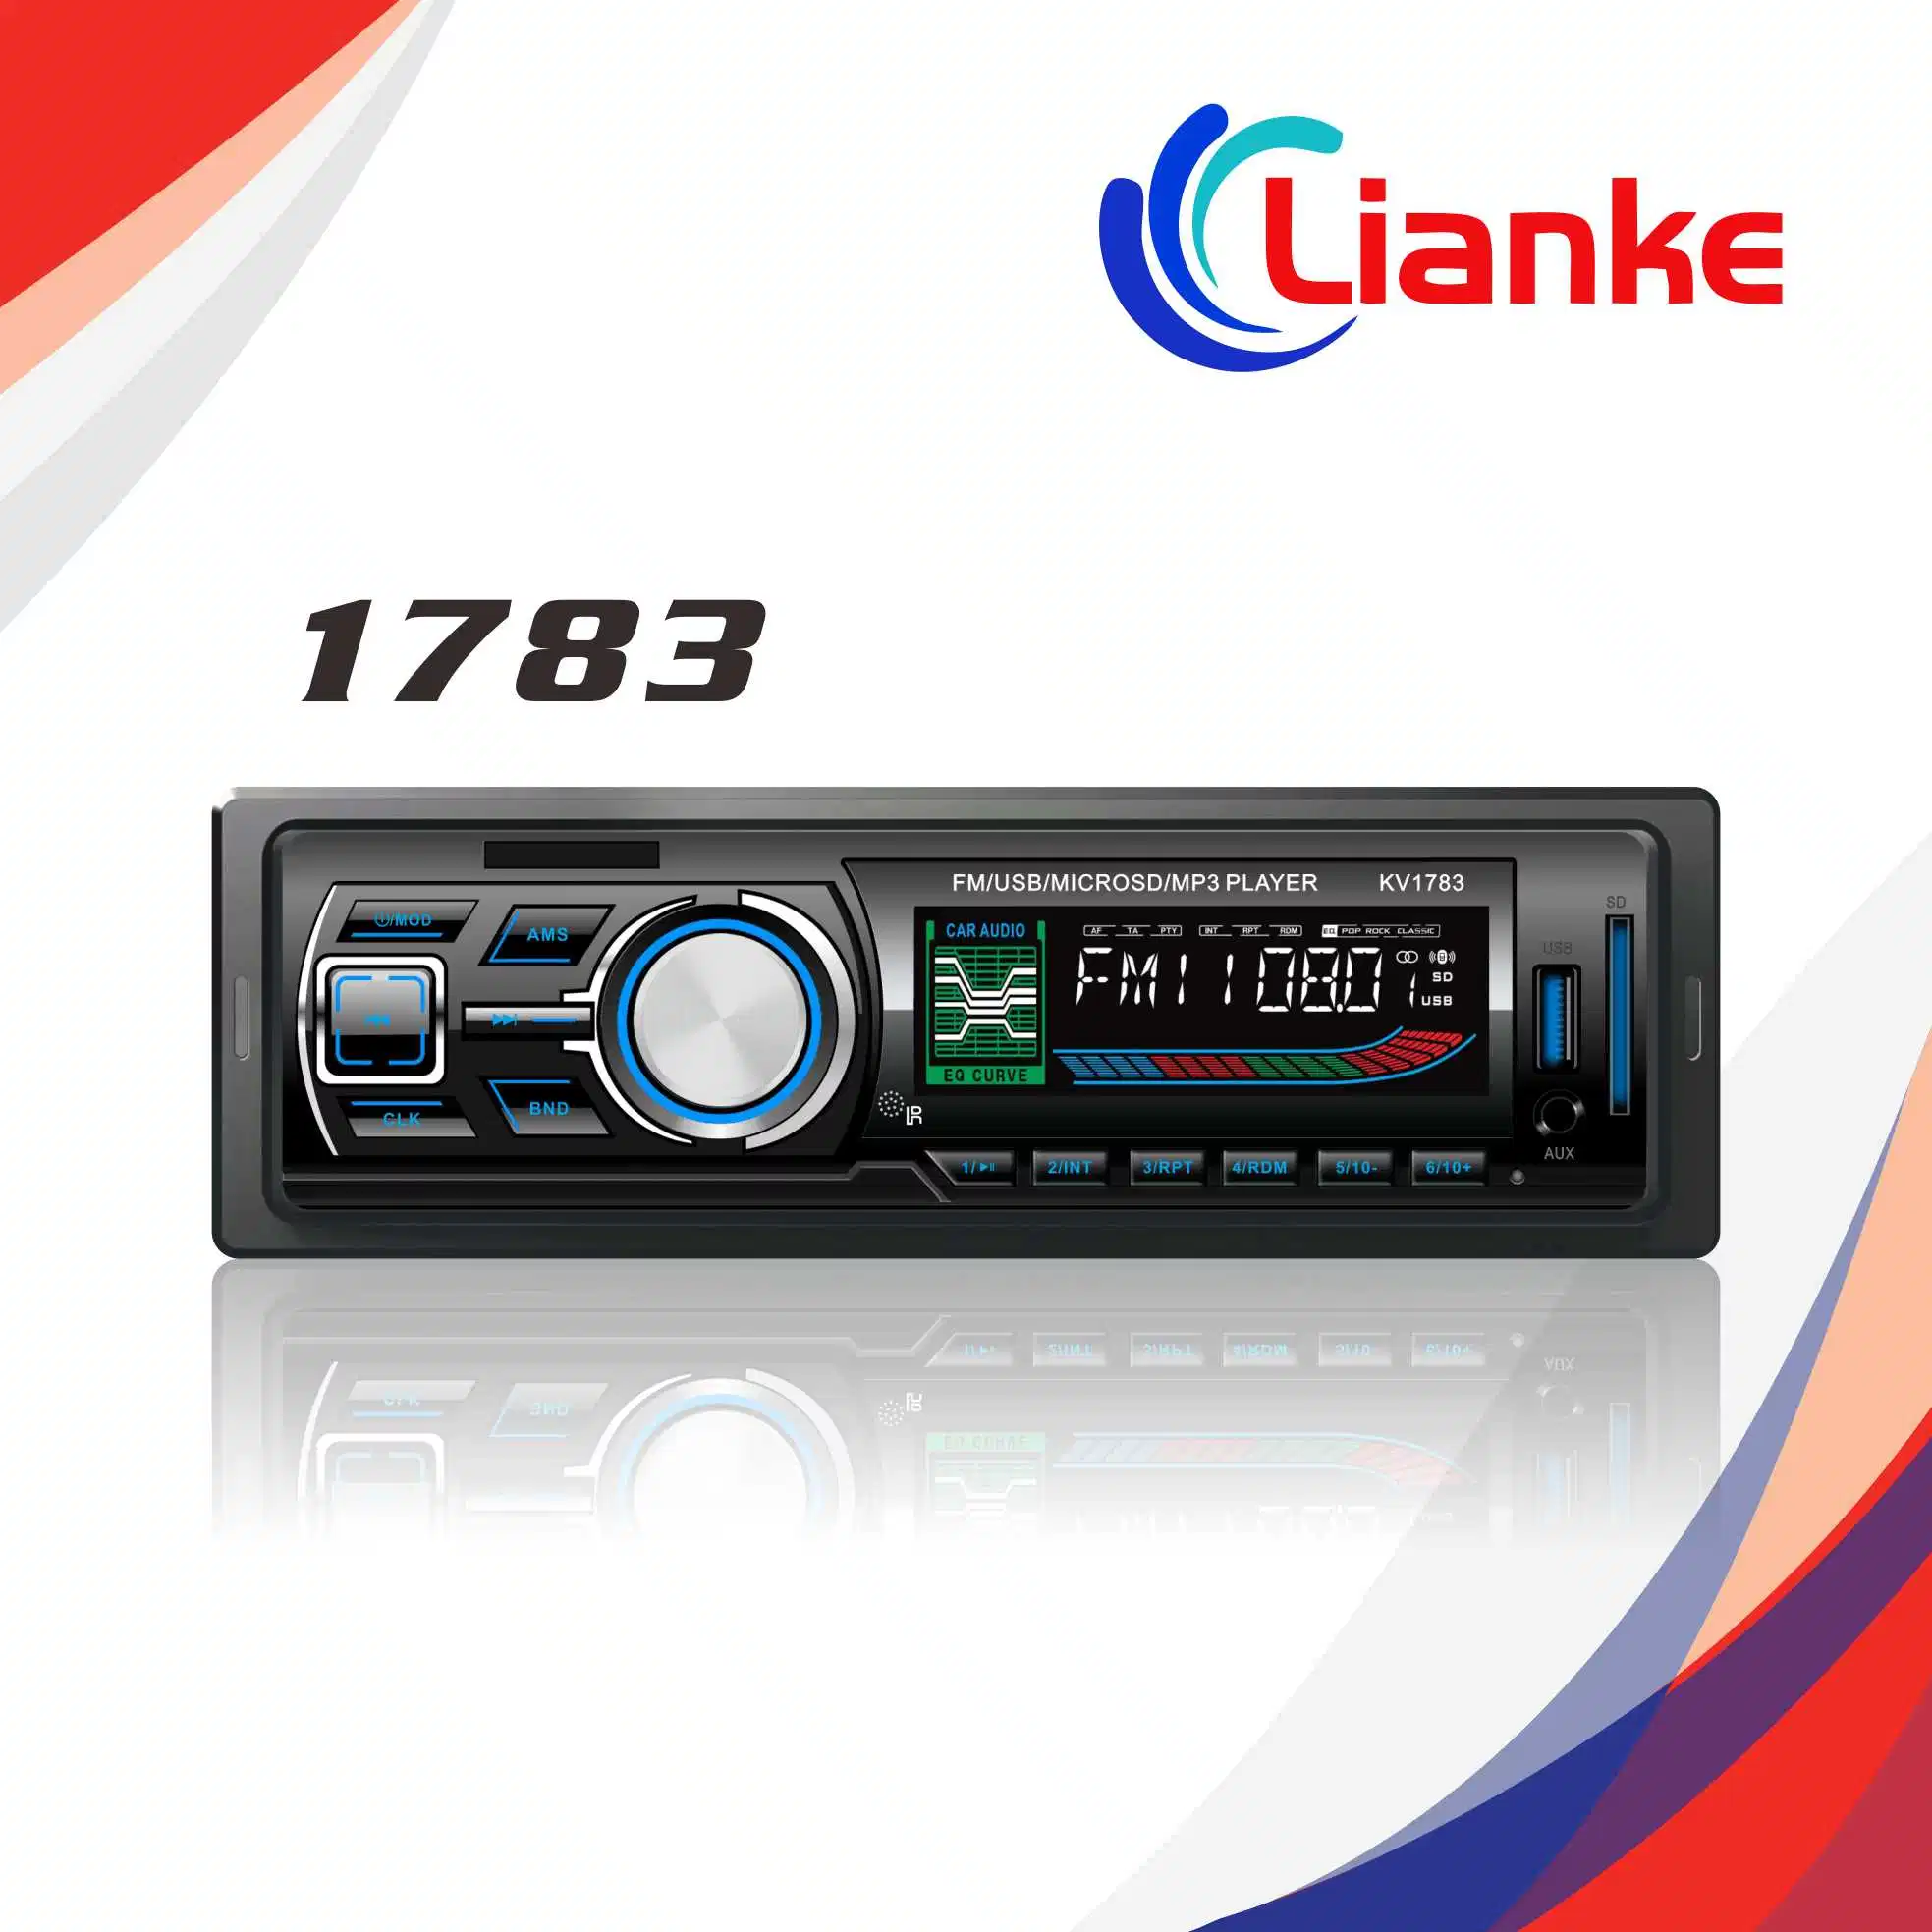 Hot Sale Panel Single DIN Car FM MP3 Radio/1783b